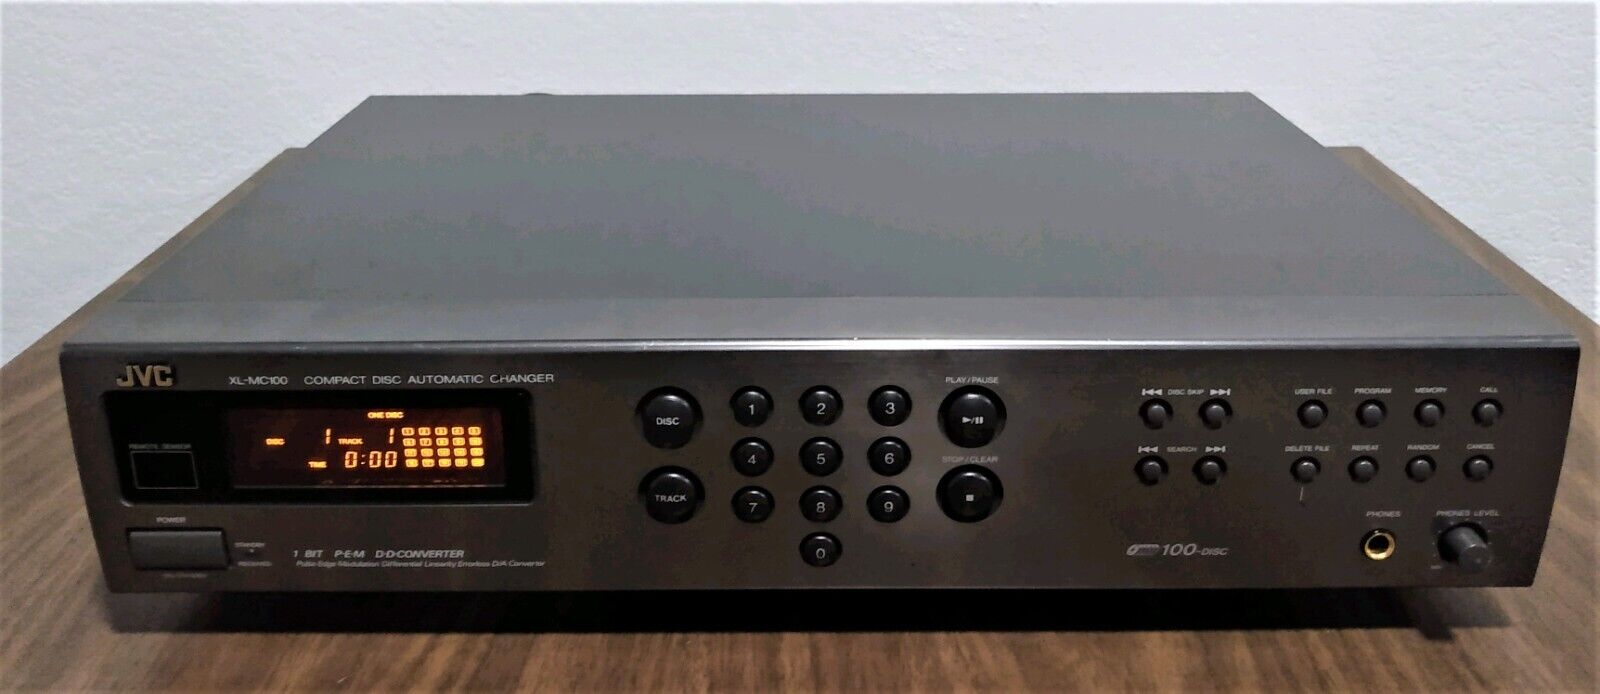 Jvc Compact Disc Automatic Changer Controller For Xl-mc100, 1 Bit Dd Converter